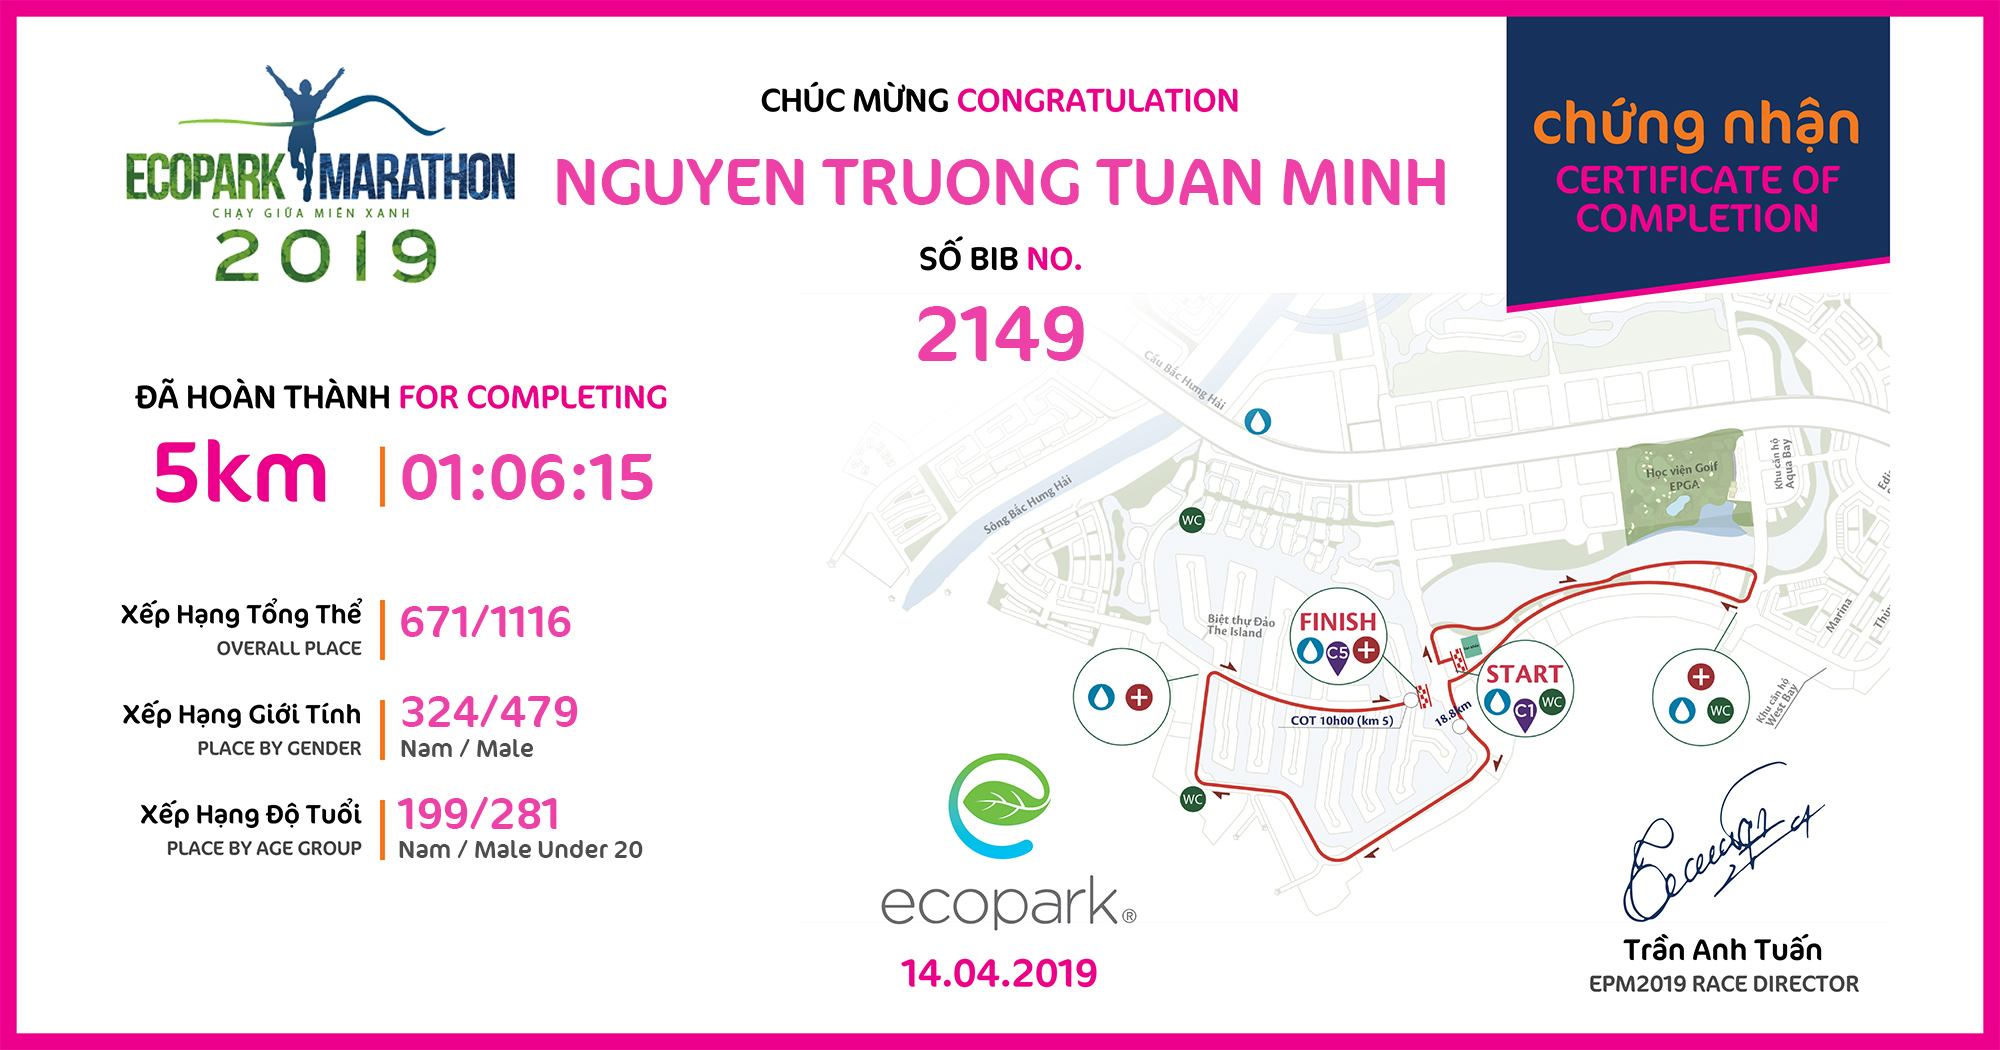 2149 - Nguyen Truong Tuan Minh